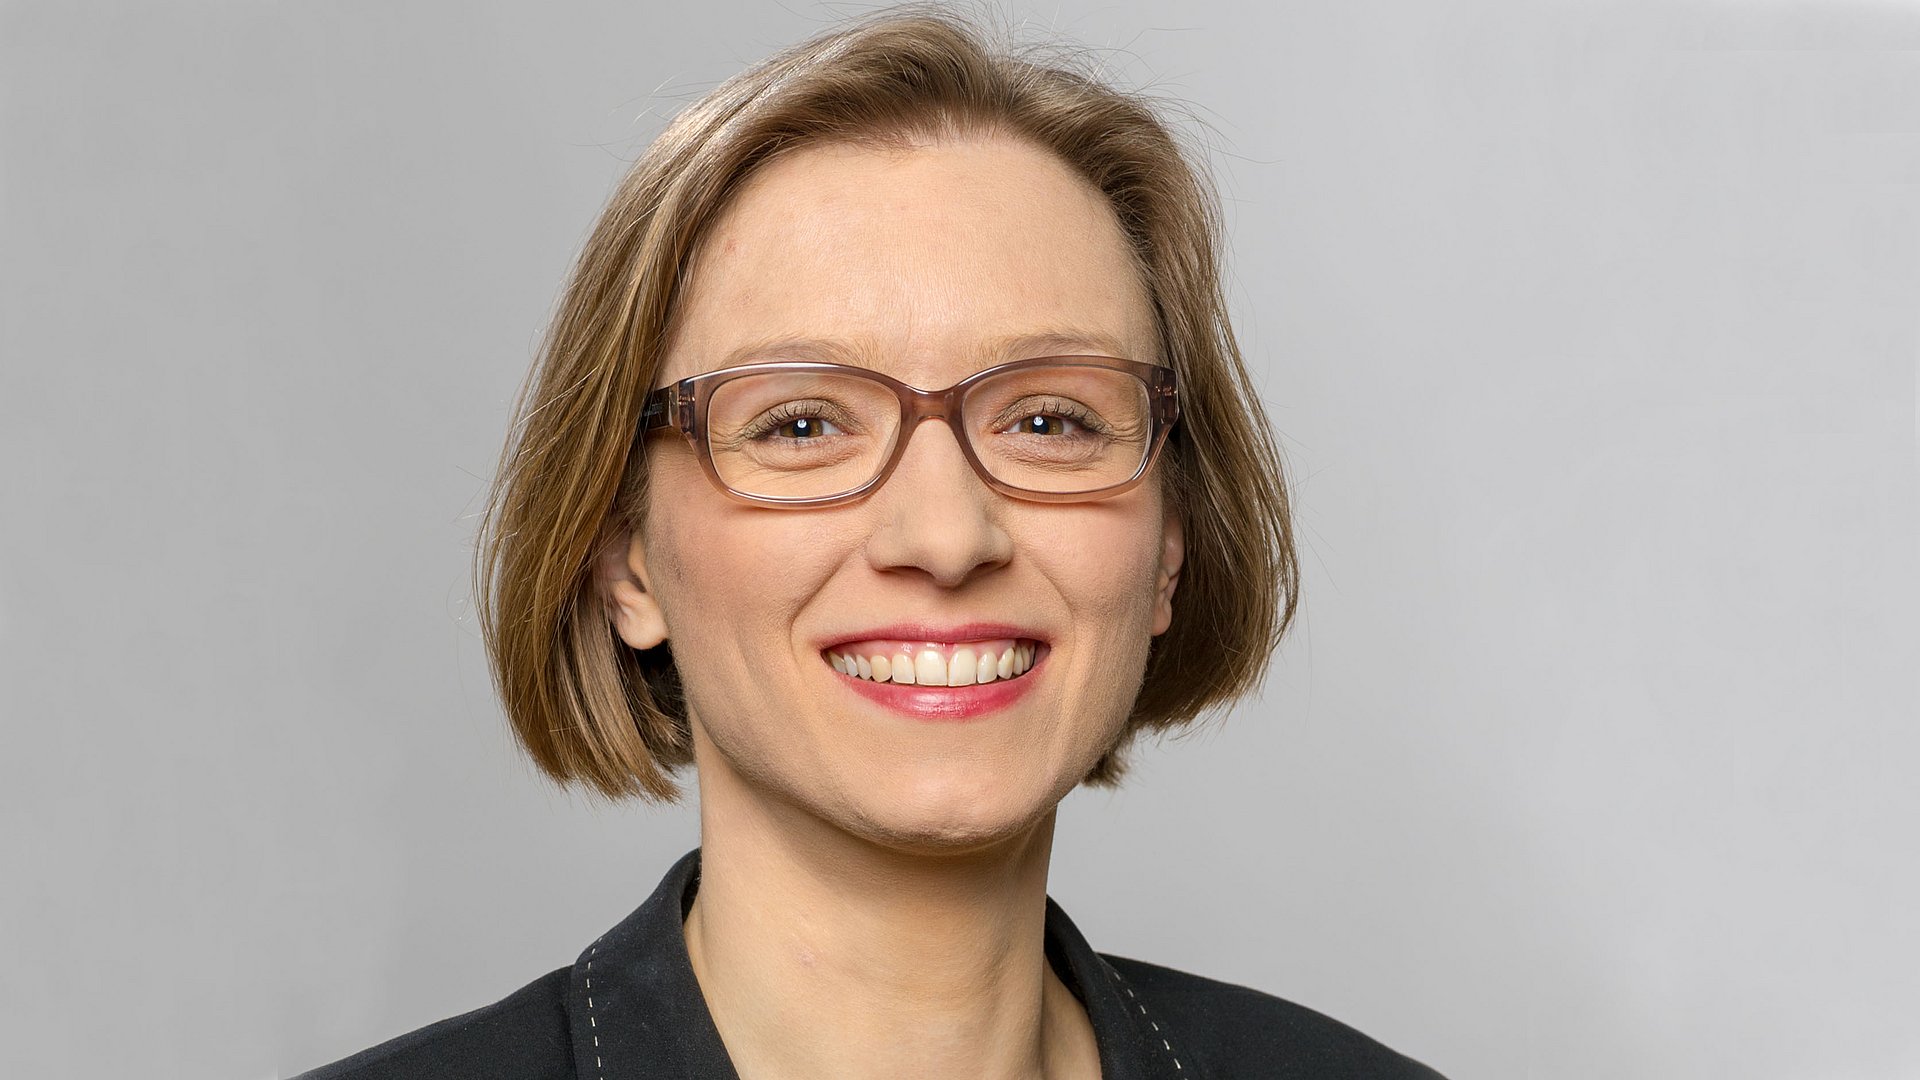 Prof. Lisa Herzog